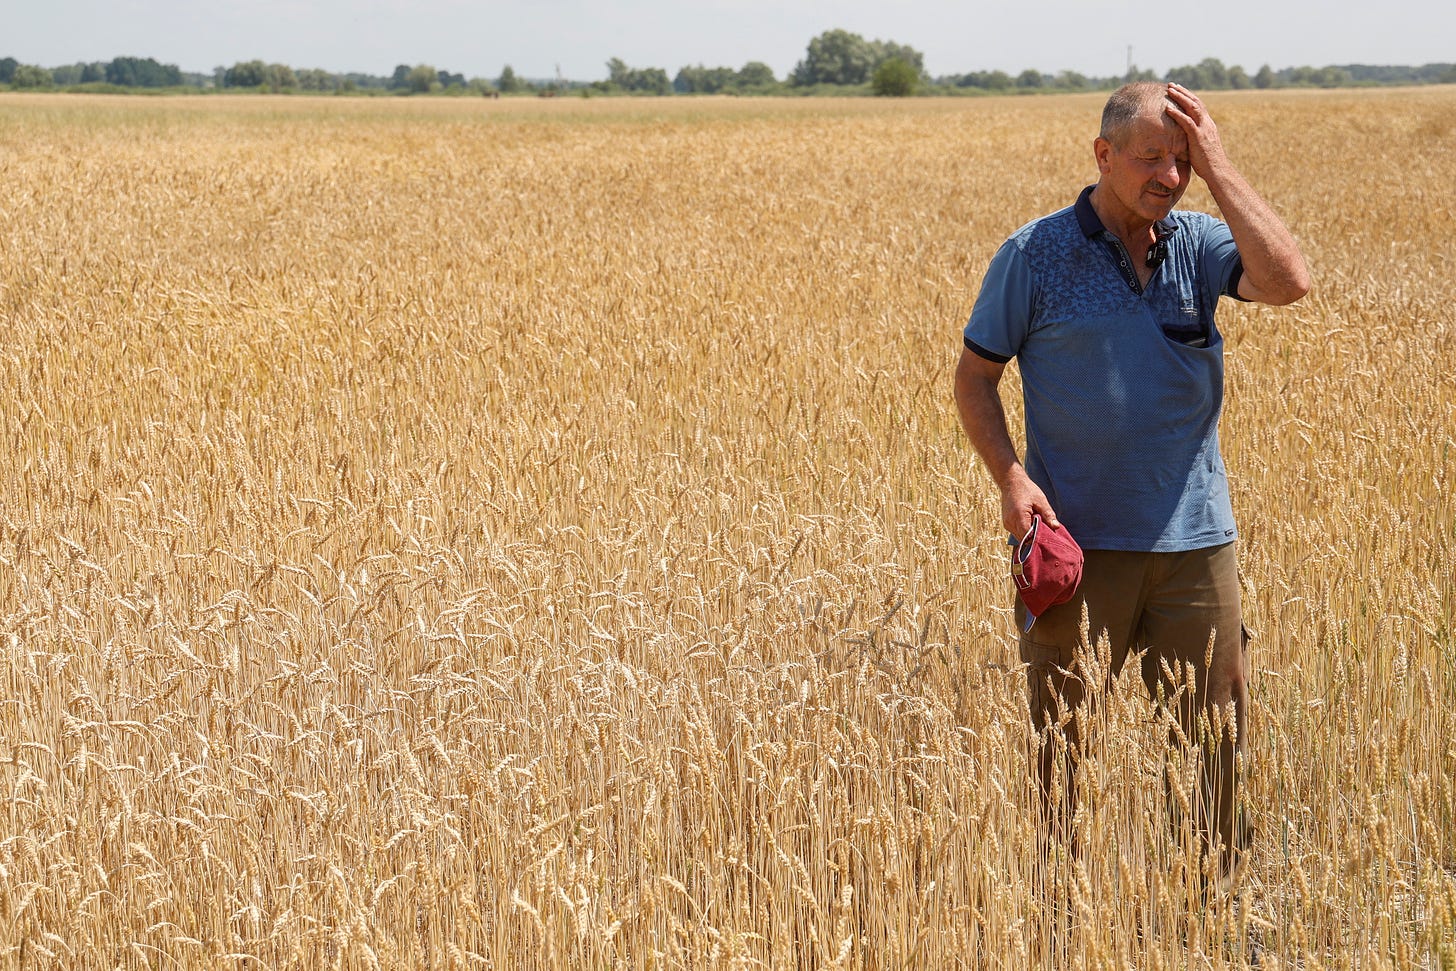 Ukraine grain storage crisis hits home as farmers harvest new crops |  Reuters